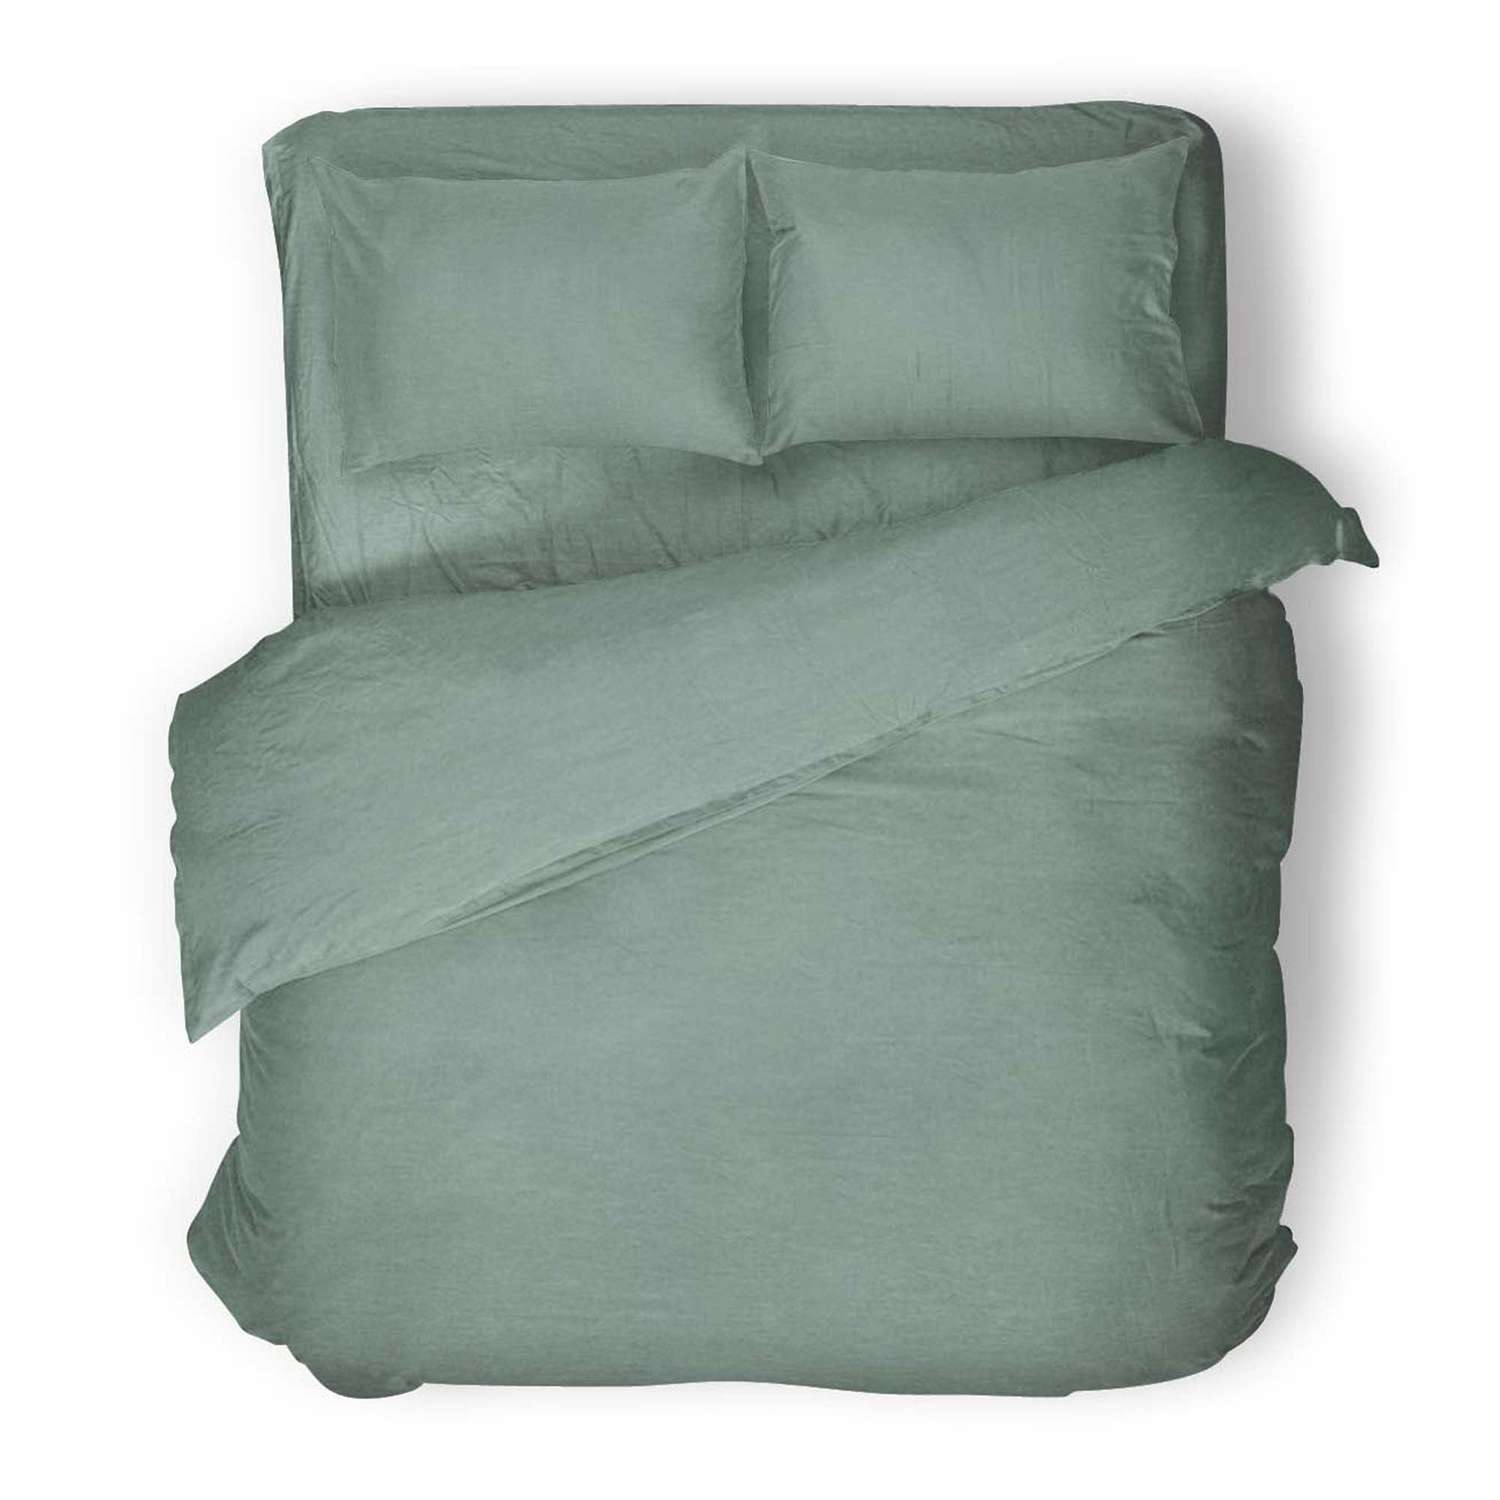 Комплект постельного белья Absolut 2СП Emerald наволочки 70х70см меланж - фото 1